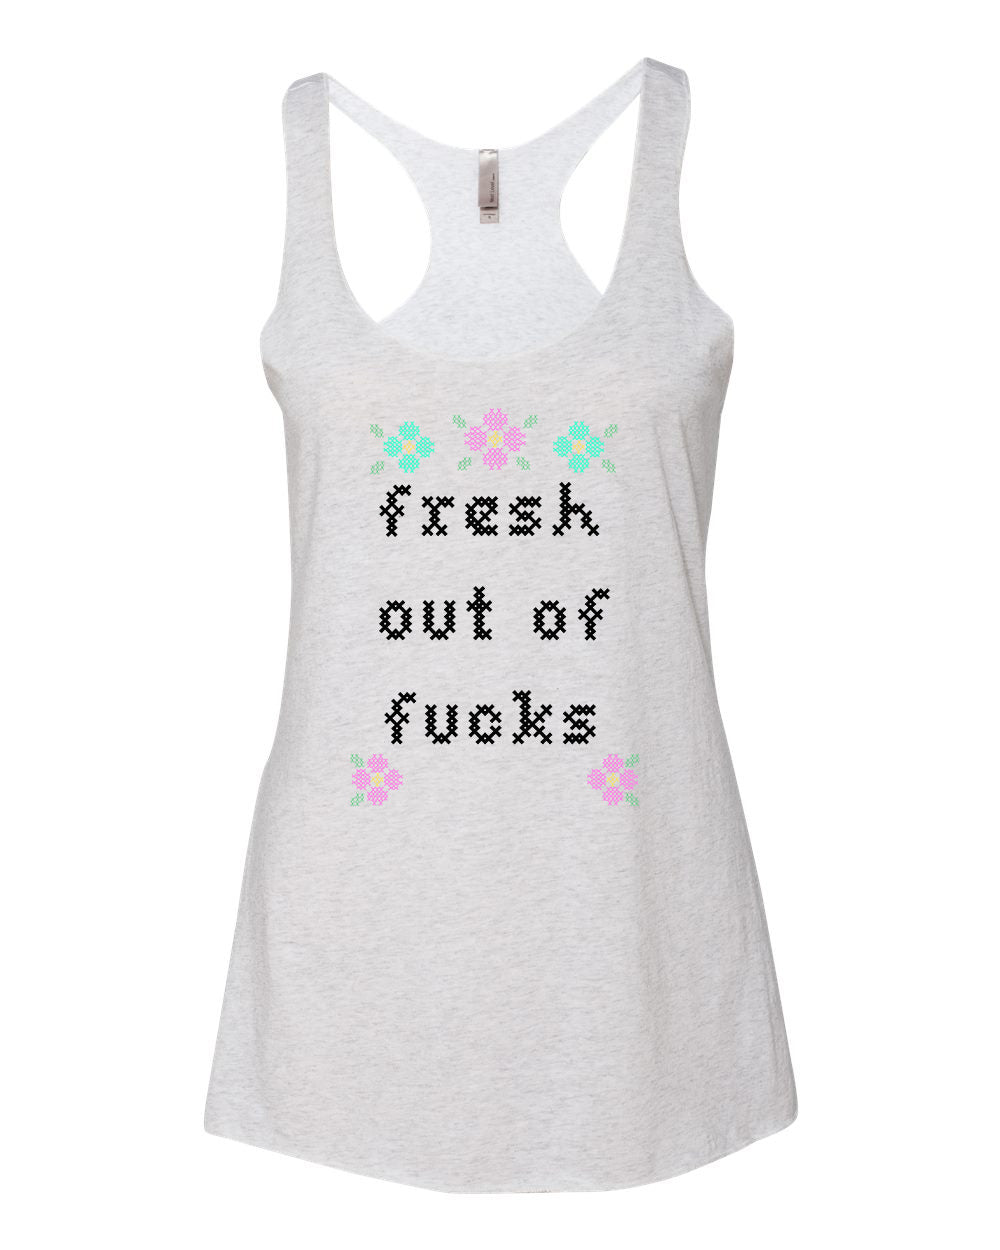 Fresh Out Of Fucks - Cross Stitch Design - Women's Tank - White